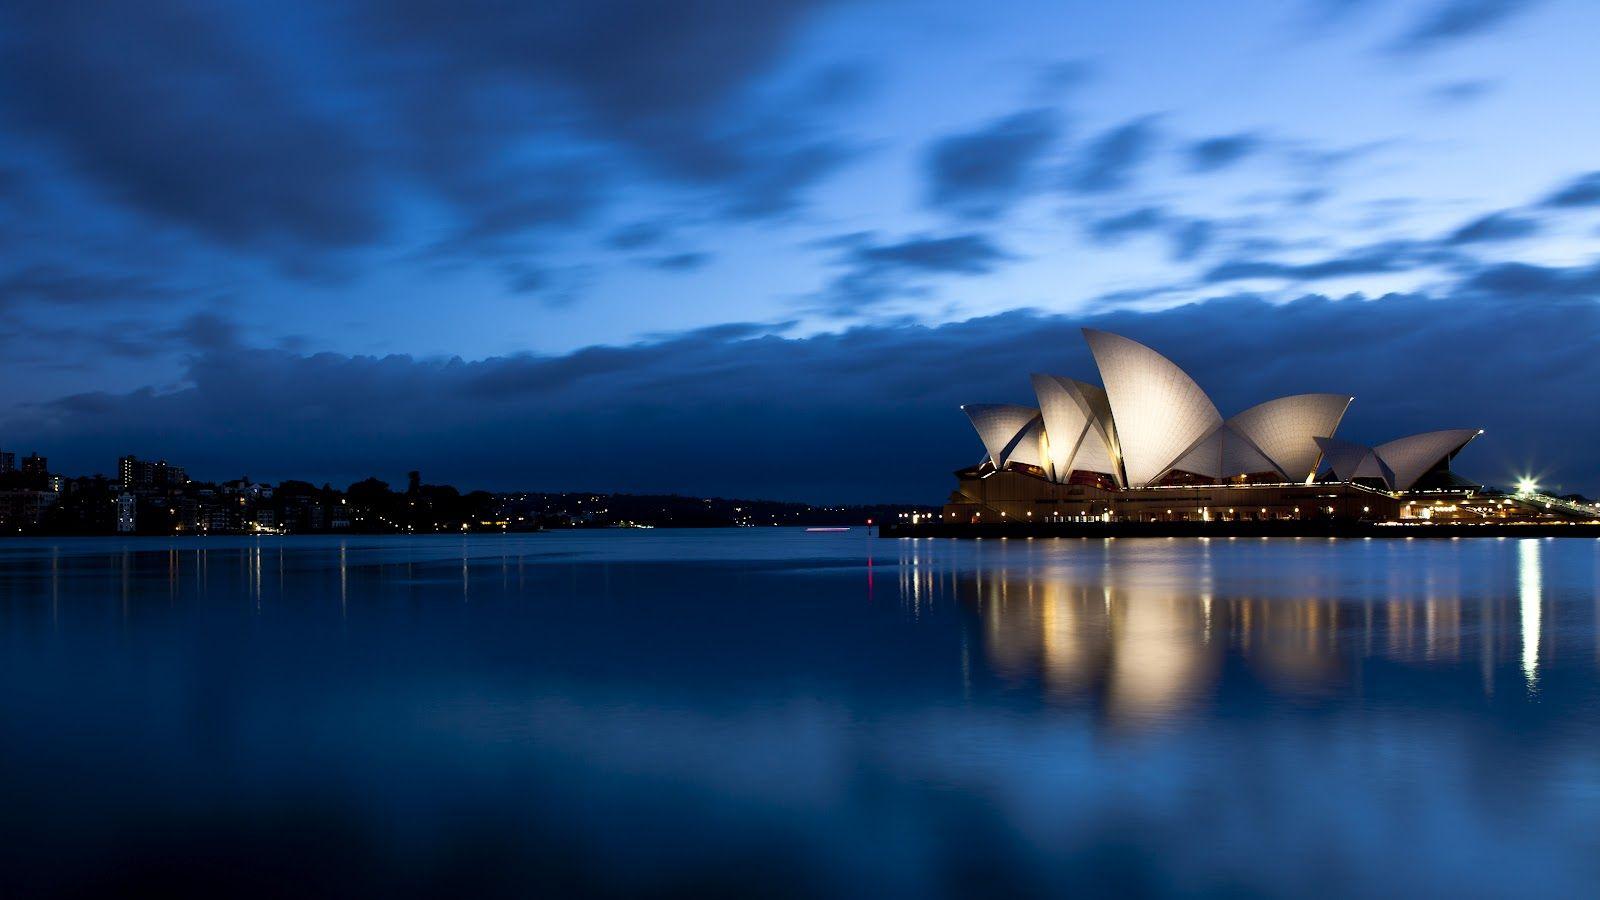 Wallpaper.wiki Sydney Opera House HD 1600x900 Image PIC WPD0014739